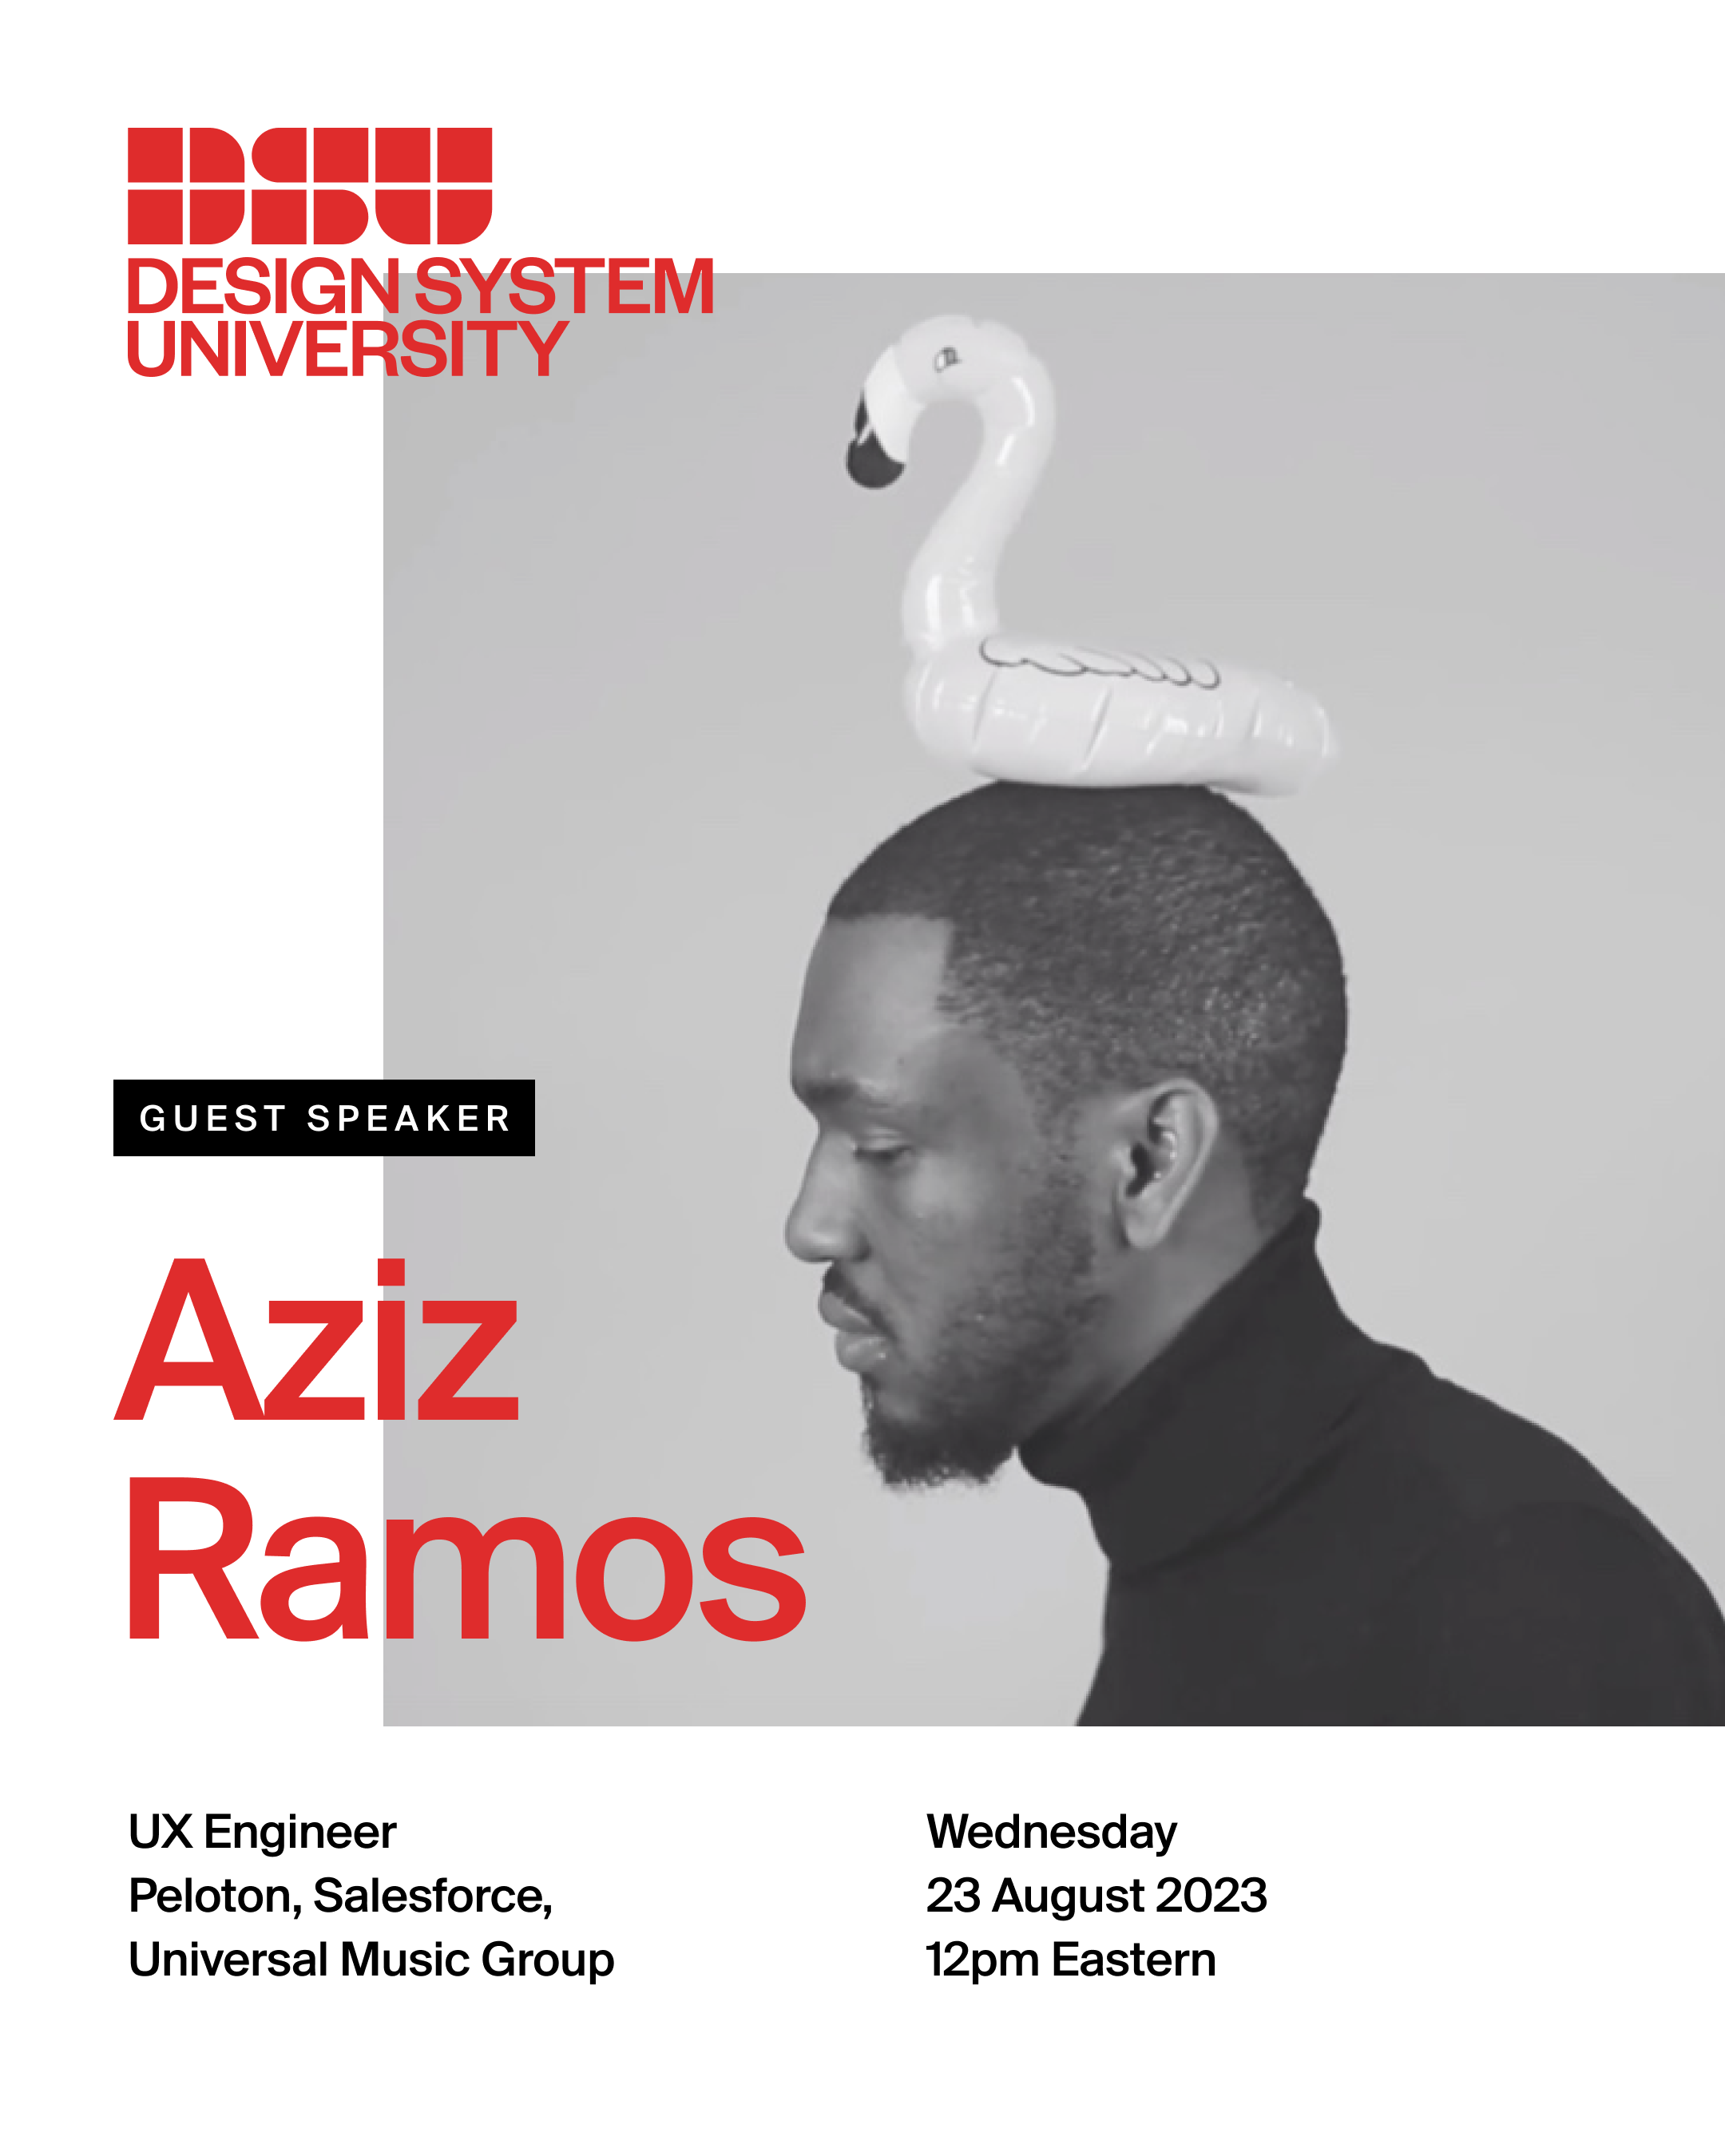 Instagram post for “Guest speaker Aziz Ramos” event